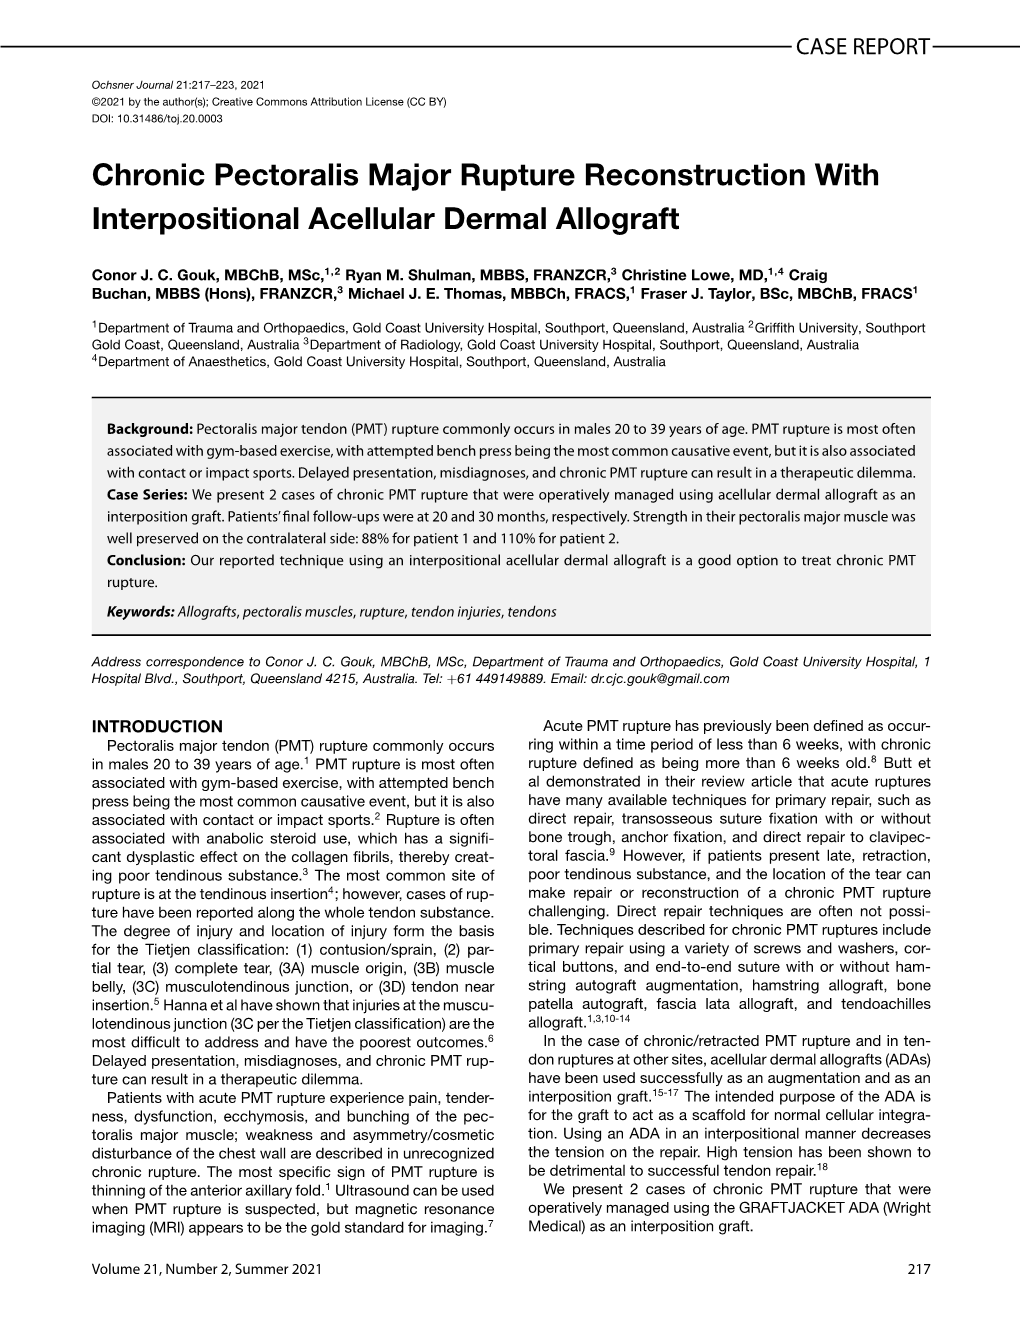 Chronic Pectoralis Major Rupture Reconstruction with Interpositional Acellular Dermal Allograft